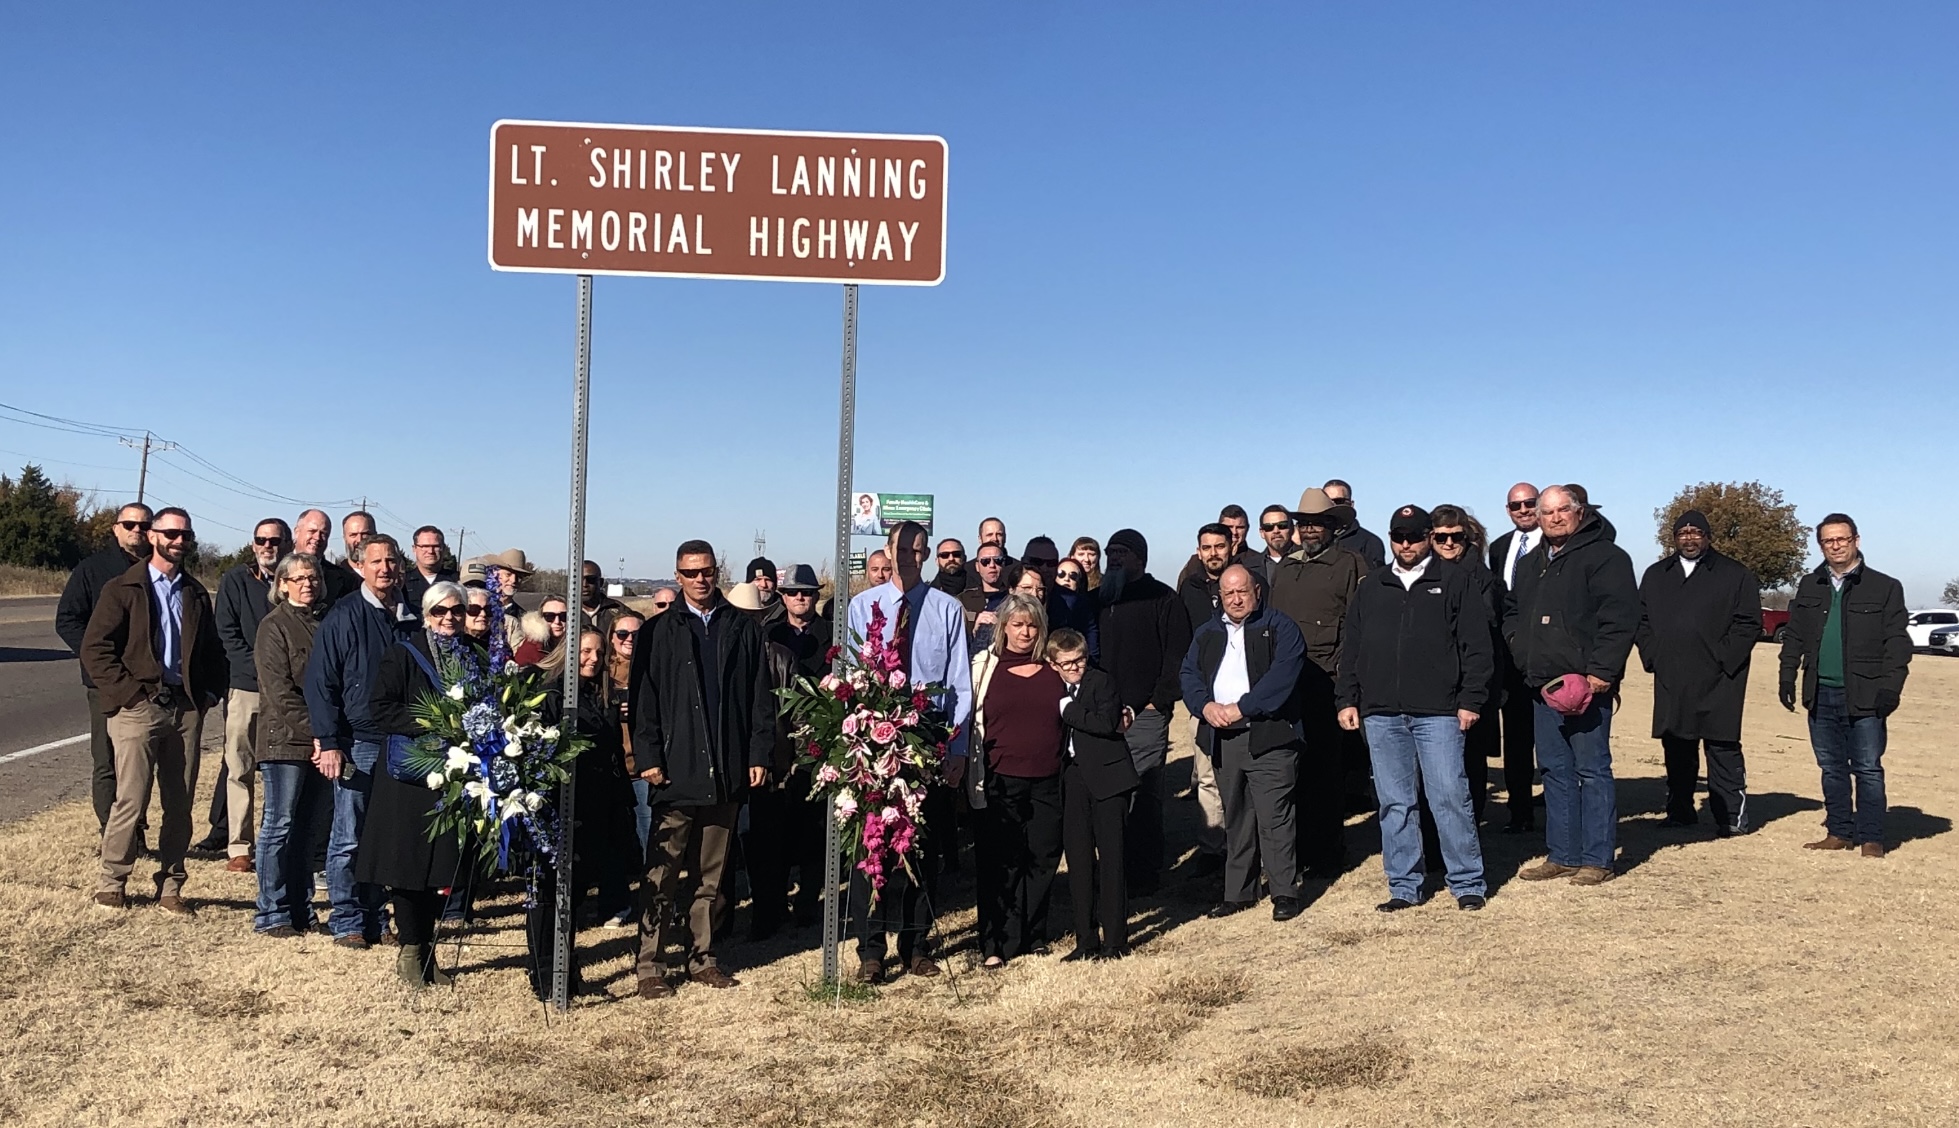 Memorial Northwest Expressway for Lieutenant Shirley Lanning